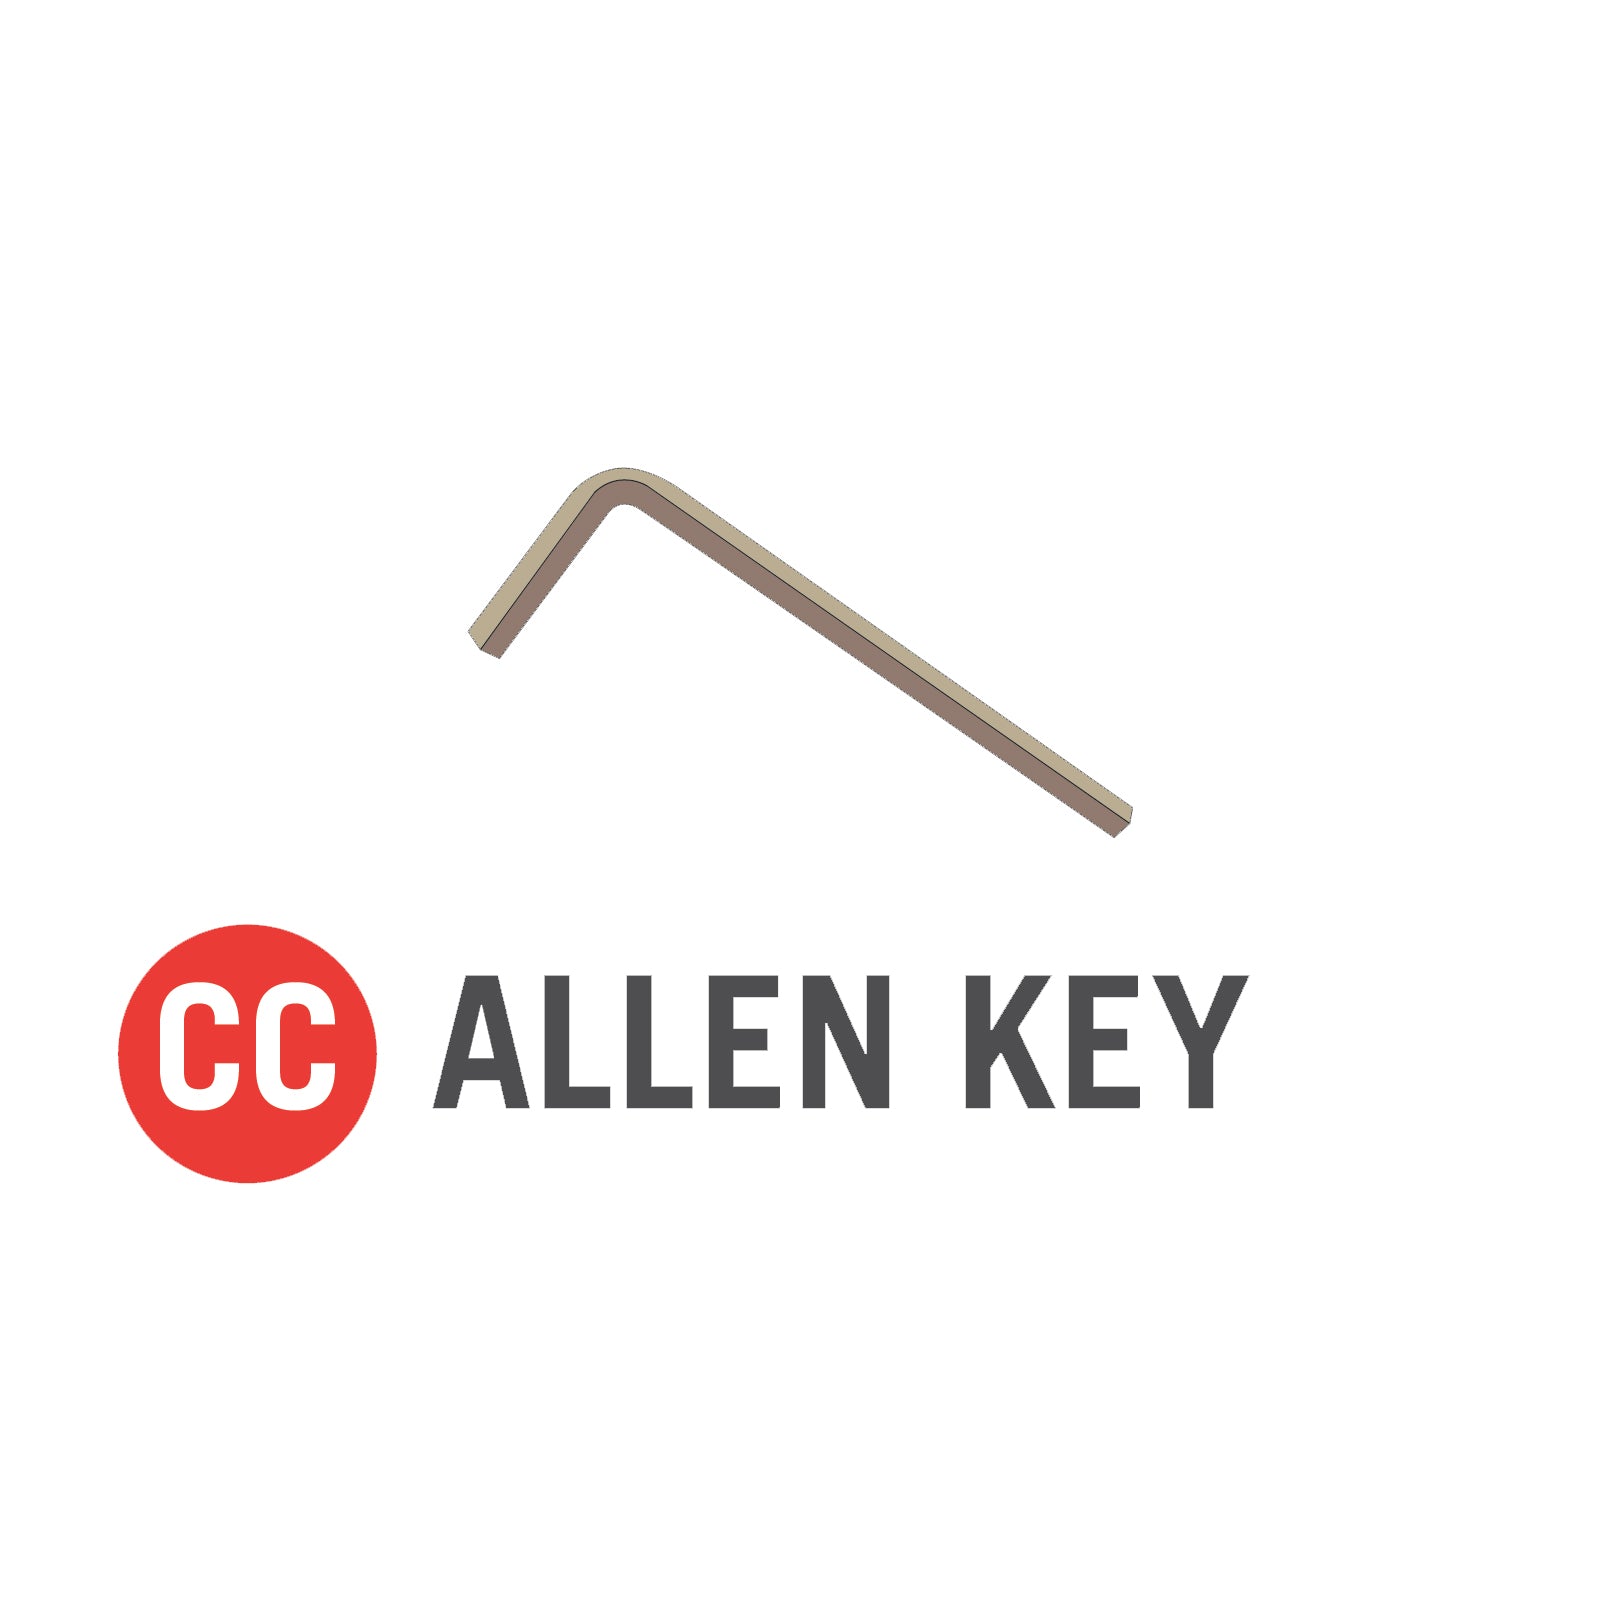 CC Allen Key for 11x18 foot Horizon Trampoline